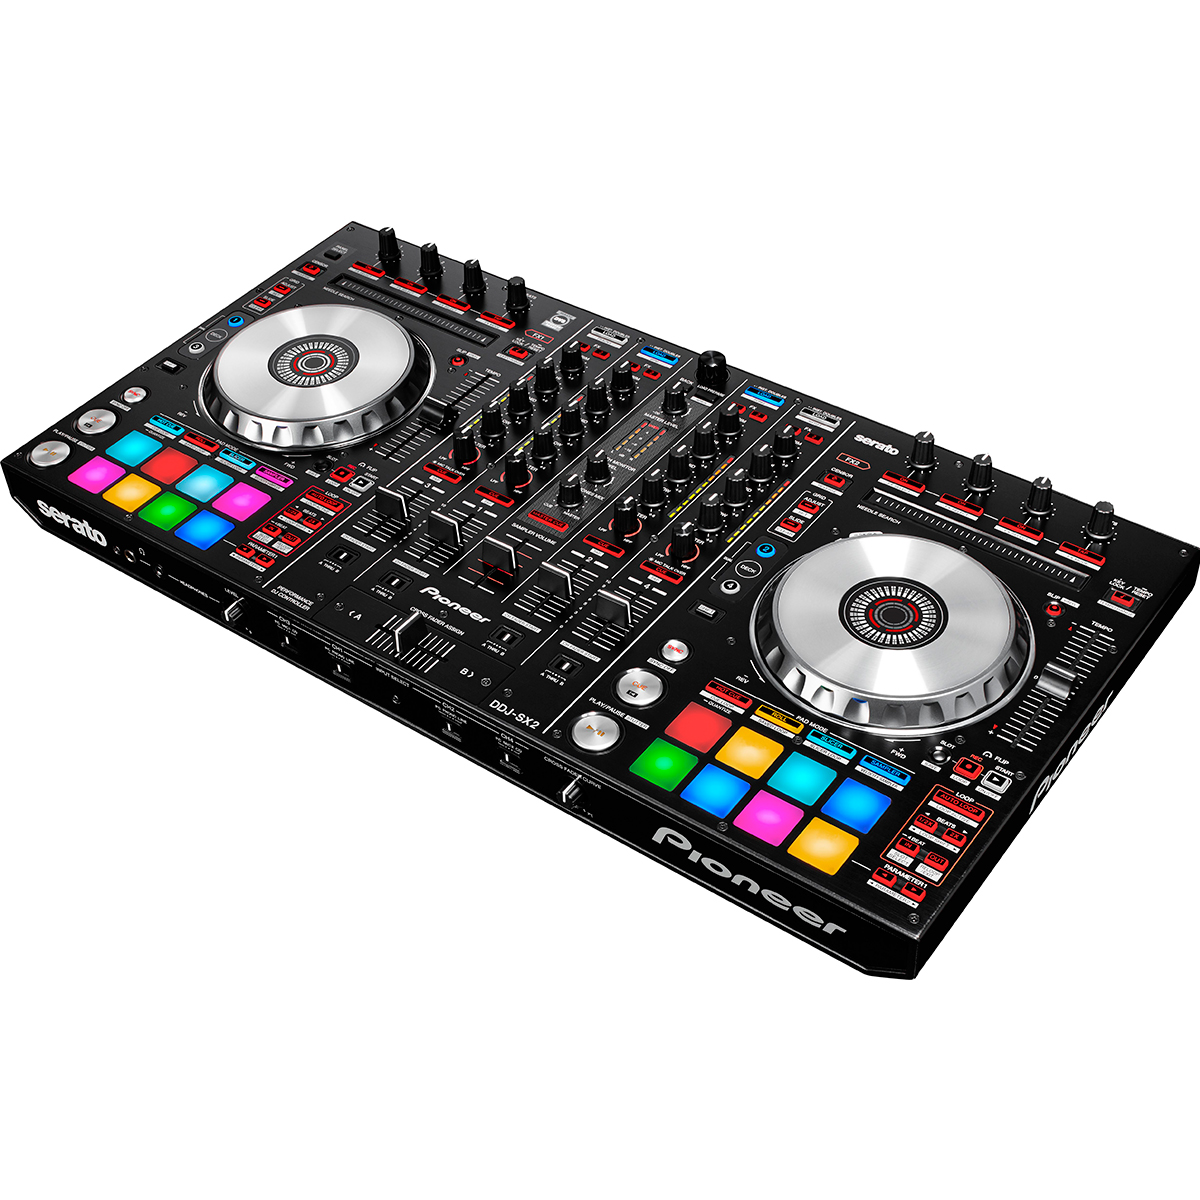  PIONEER DDJSR controlador para DJ profesional. : Instrumentos  Musicales